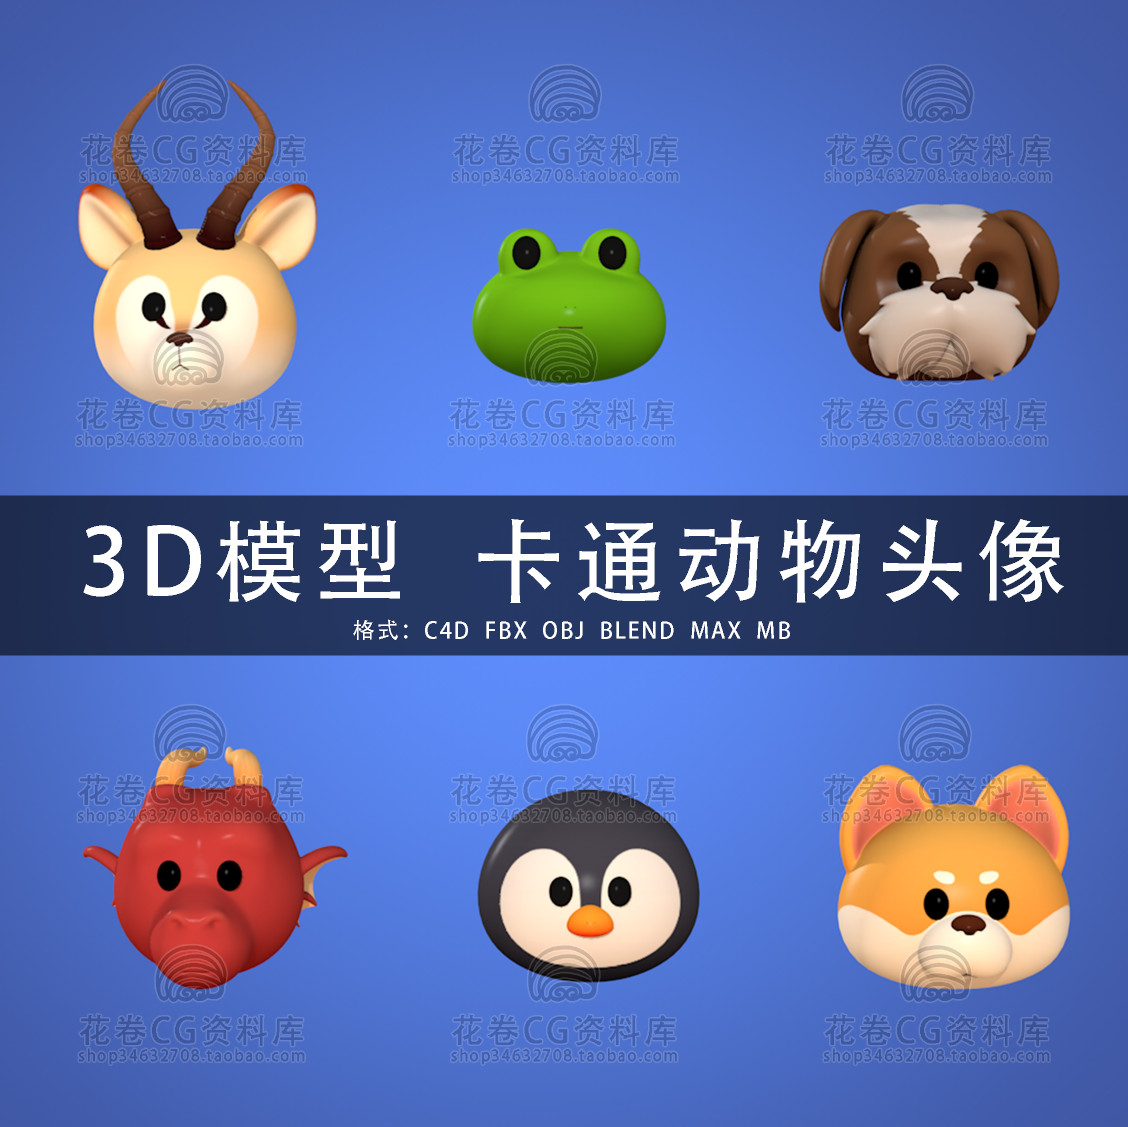 G724-C4D/MAYA/3DMAX可爱卡通动物头像狗羊企鹅龙青蛙 3D模型素材